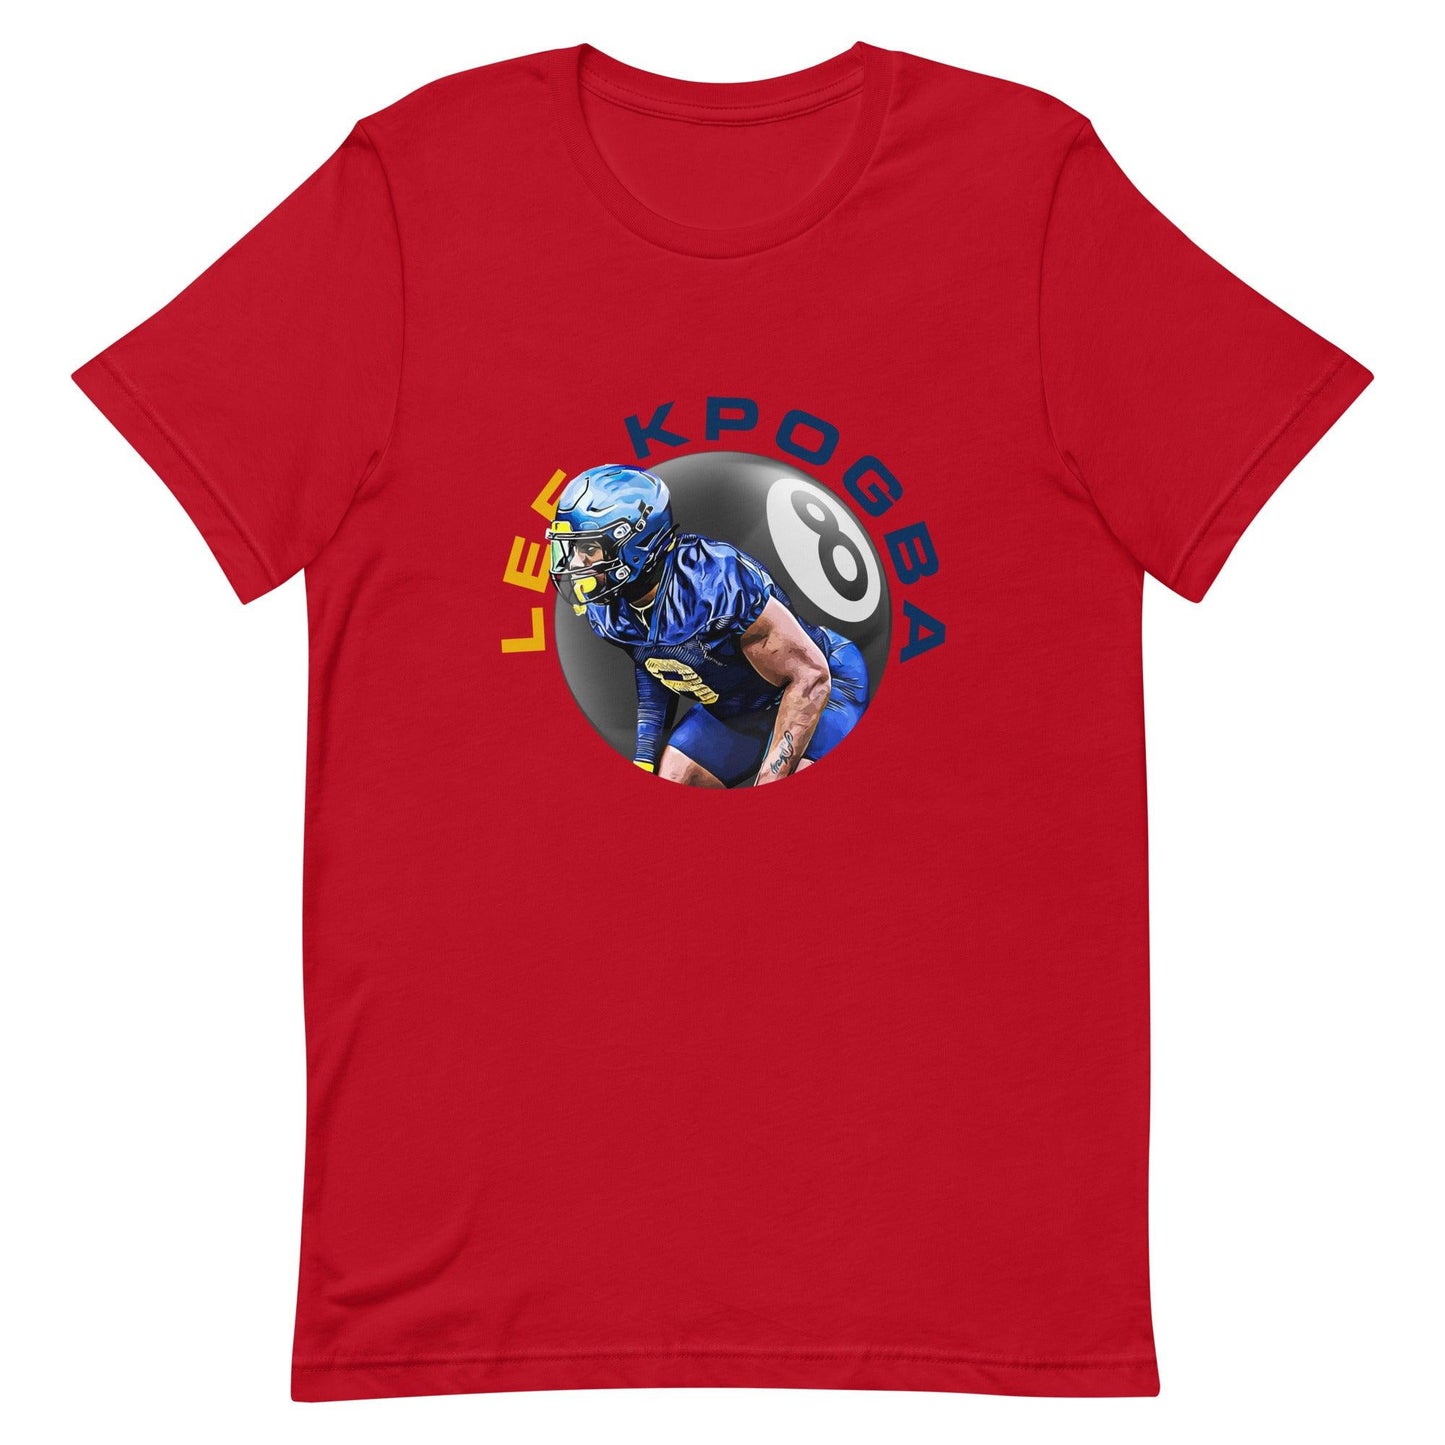 Lee Kpogba "8 Ball" t-shirt - Fan Arch